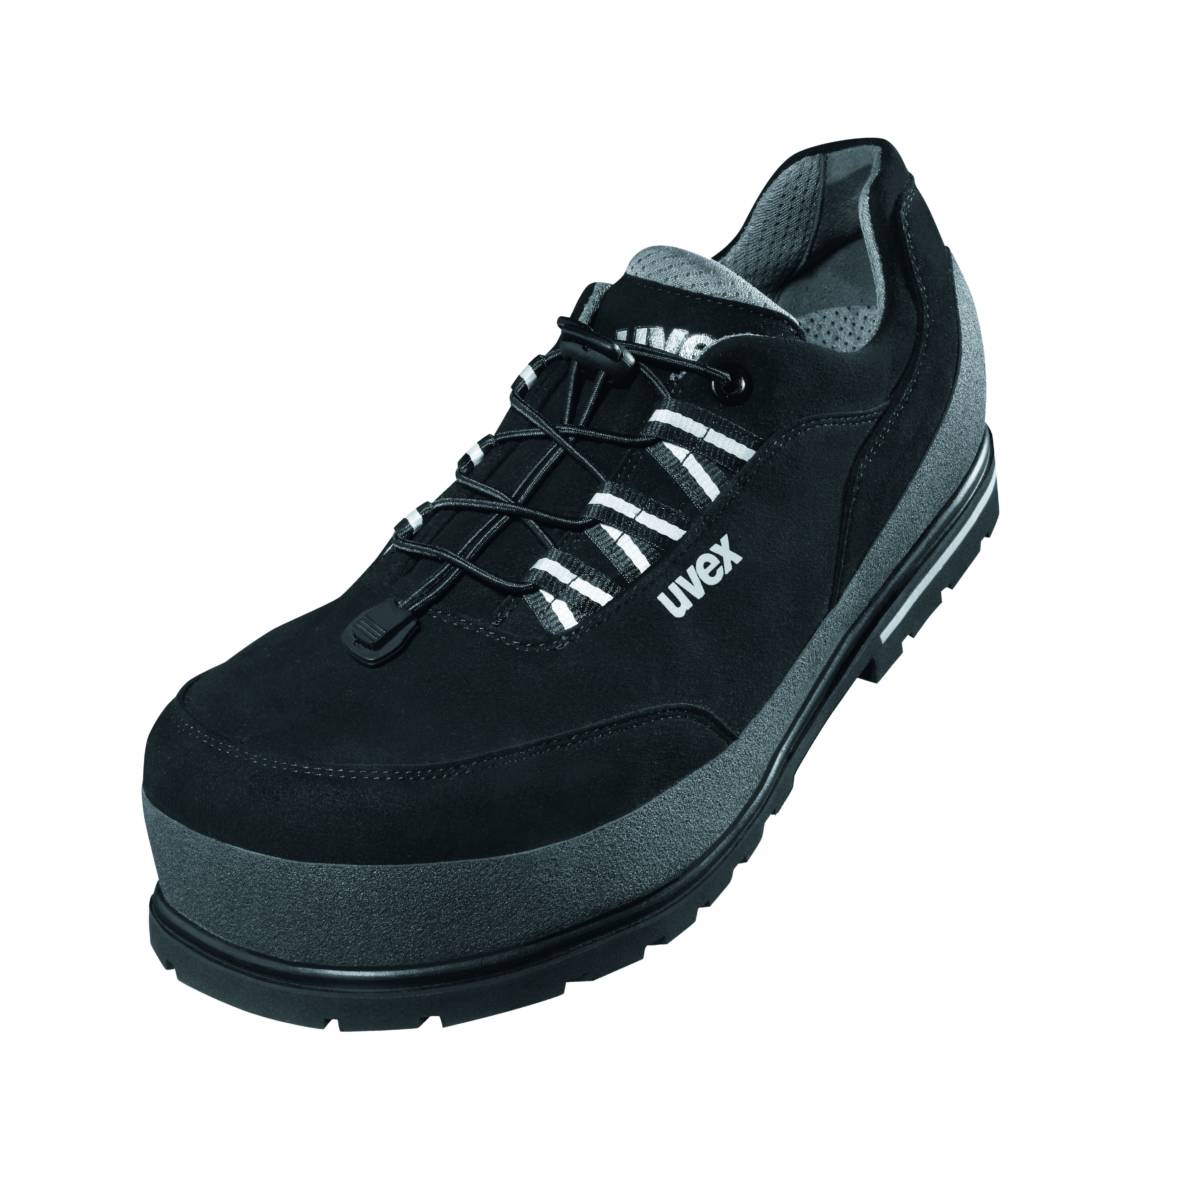 uvex 1 sport s3 src safety shoe